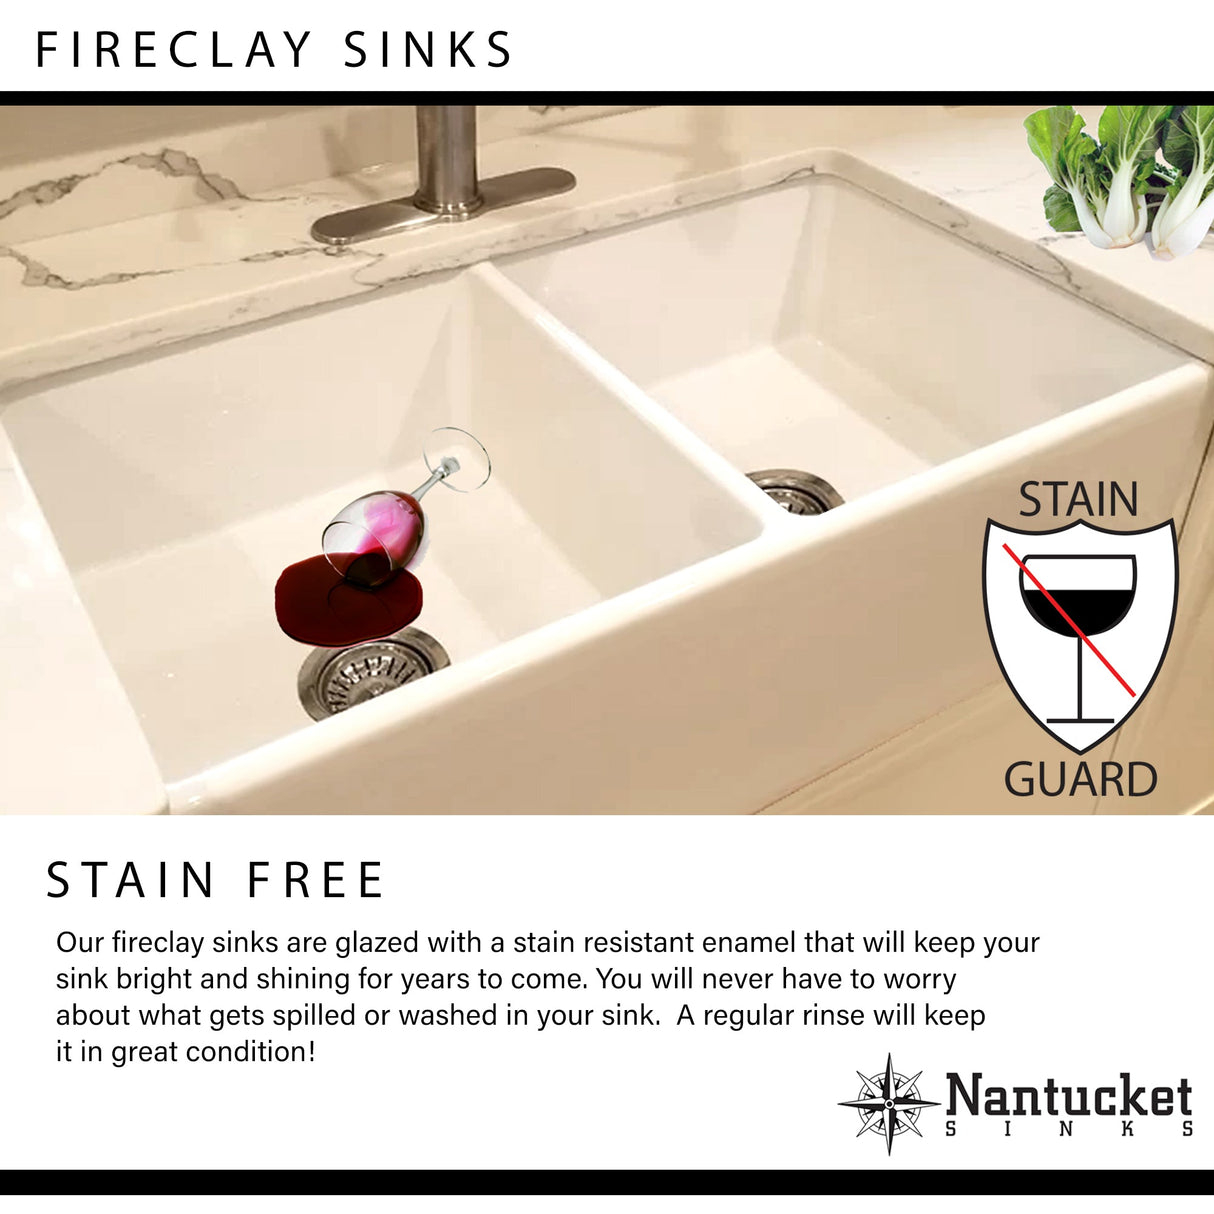 Nantucket Sinks 30-Inch Farmhouse Fireclay Sink with Shabby Green Finish